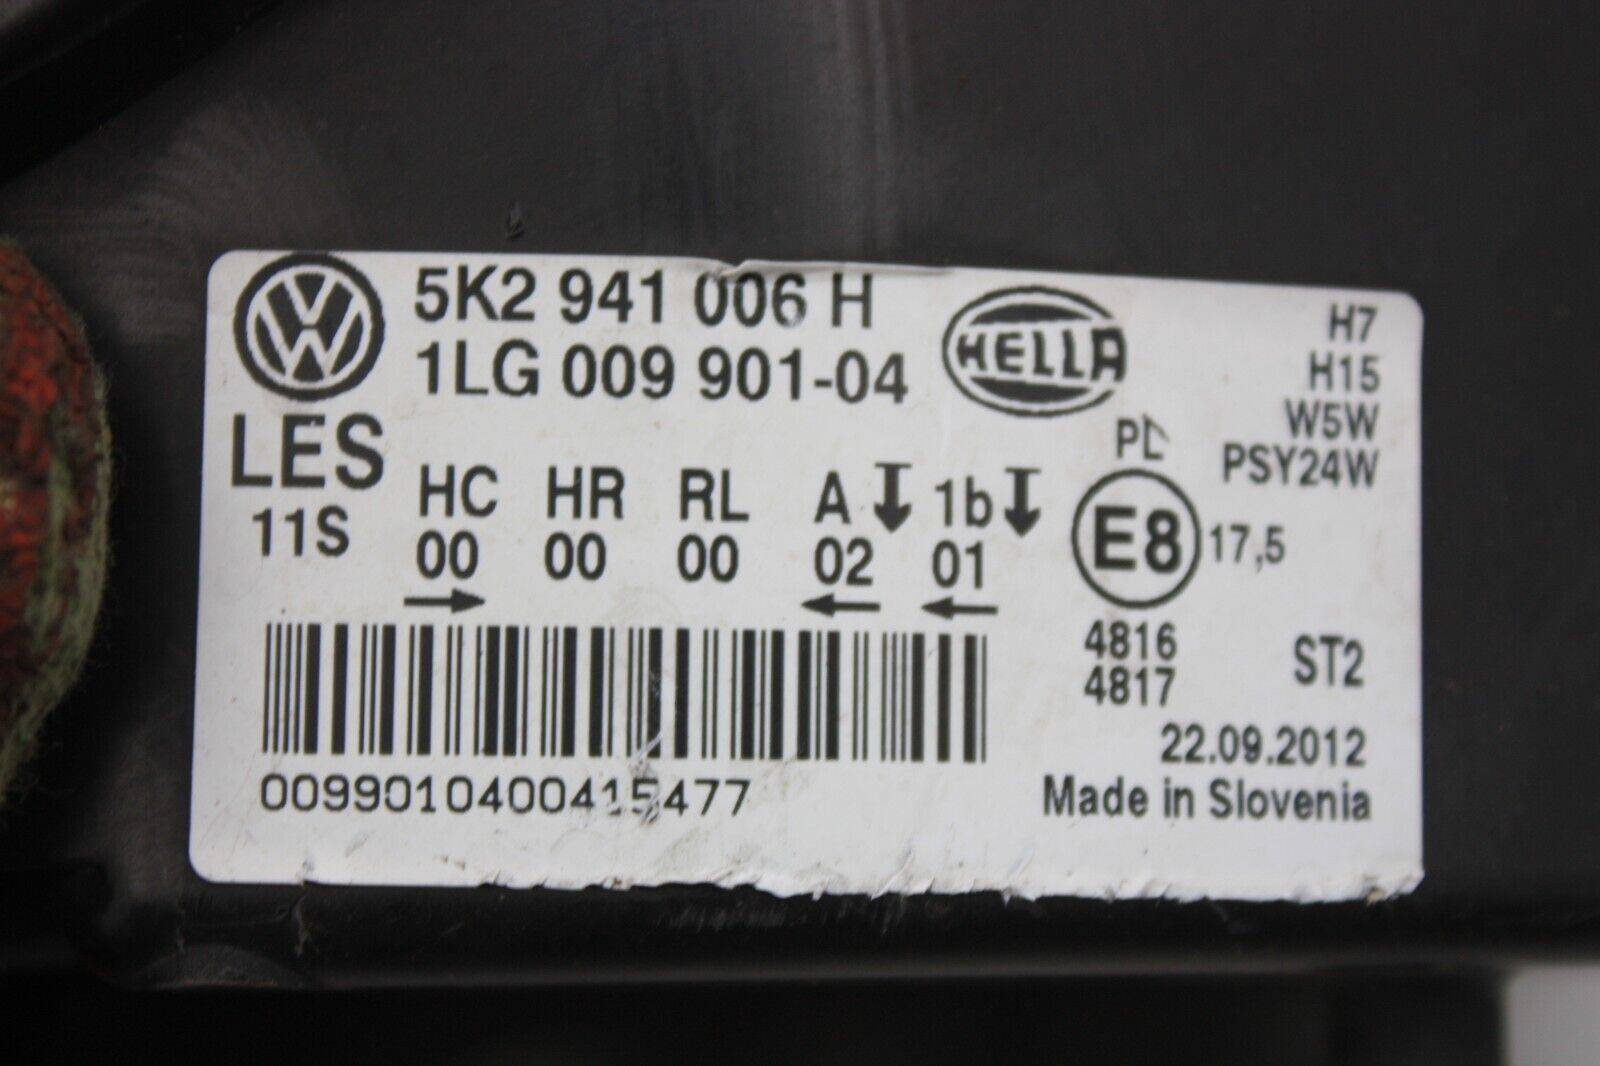 VW-Golf-Right-Side-Headlight-2009-TO-2012-5K2941006H-Genuine-175695506483-5